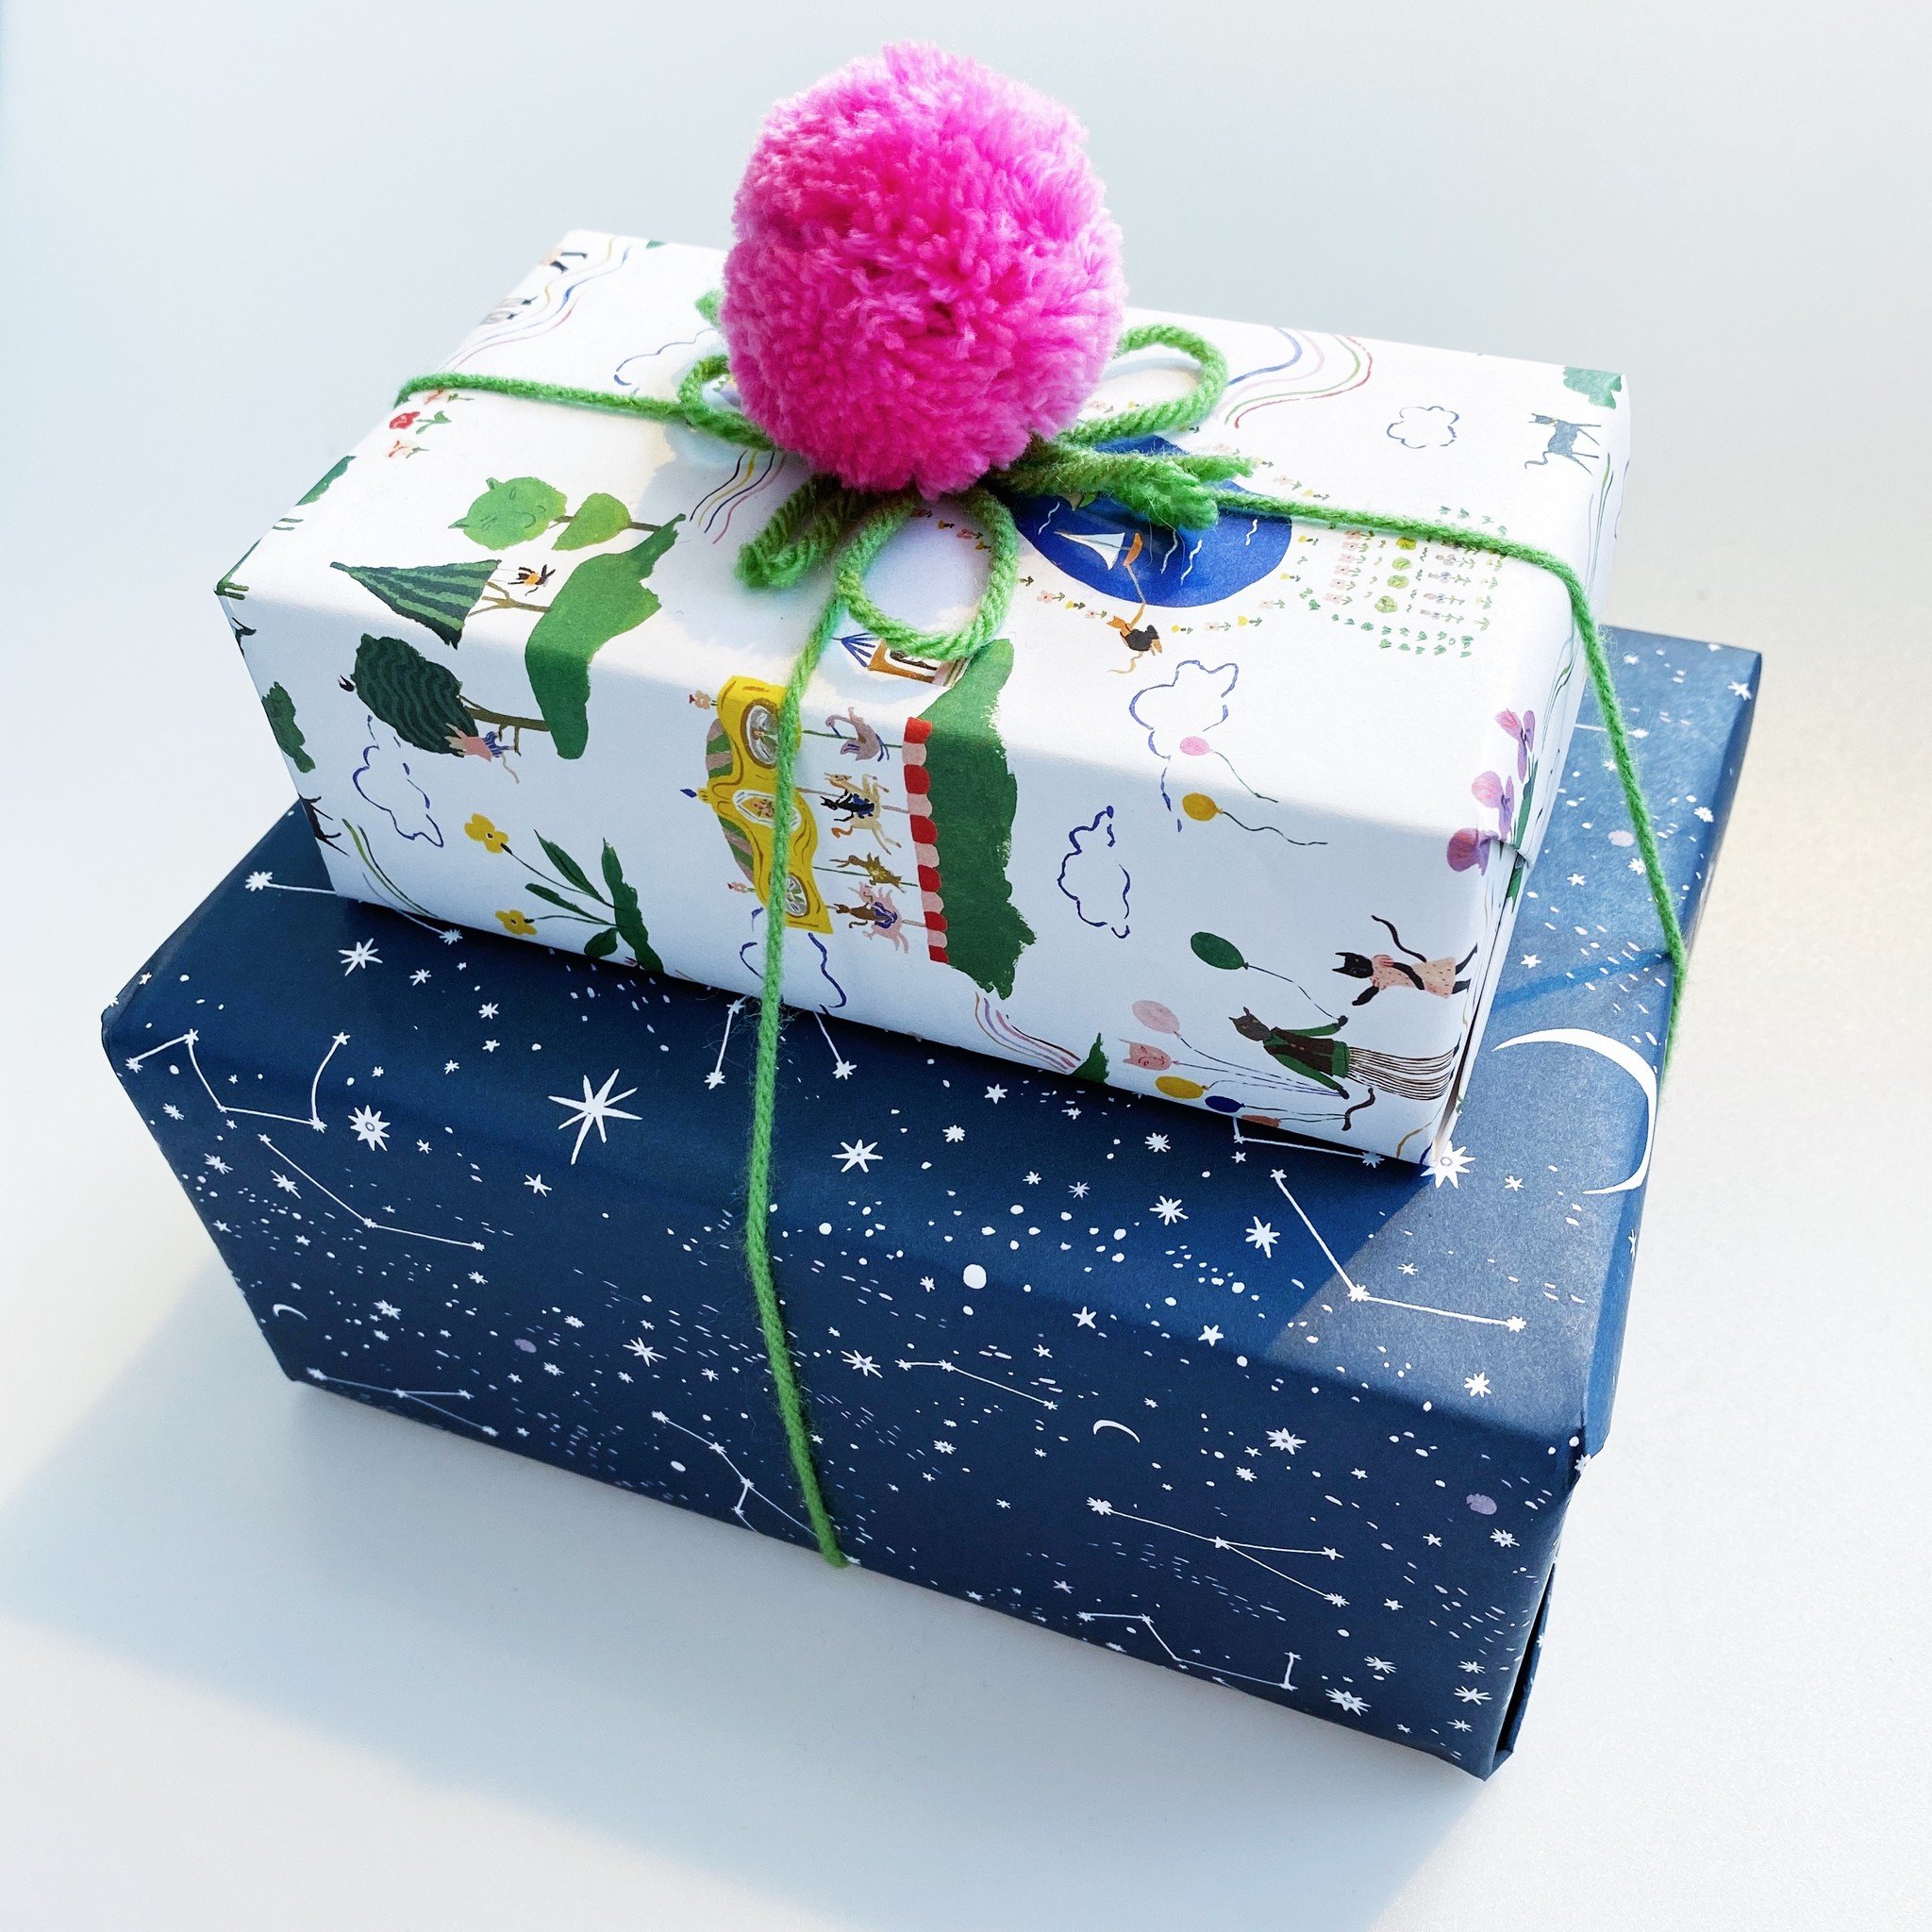 Surprise gift box